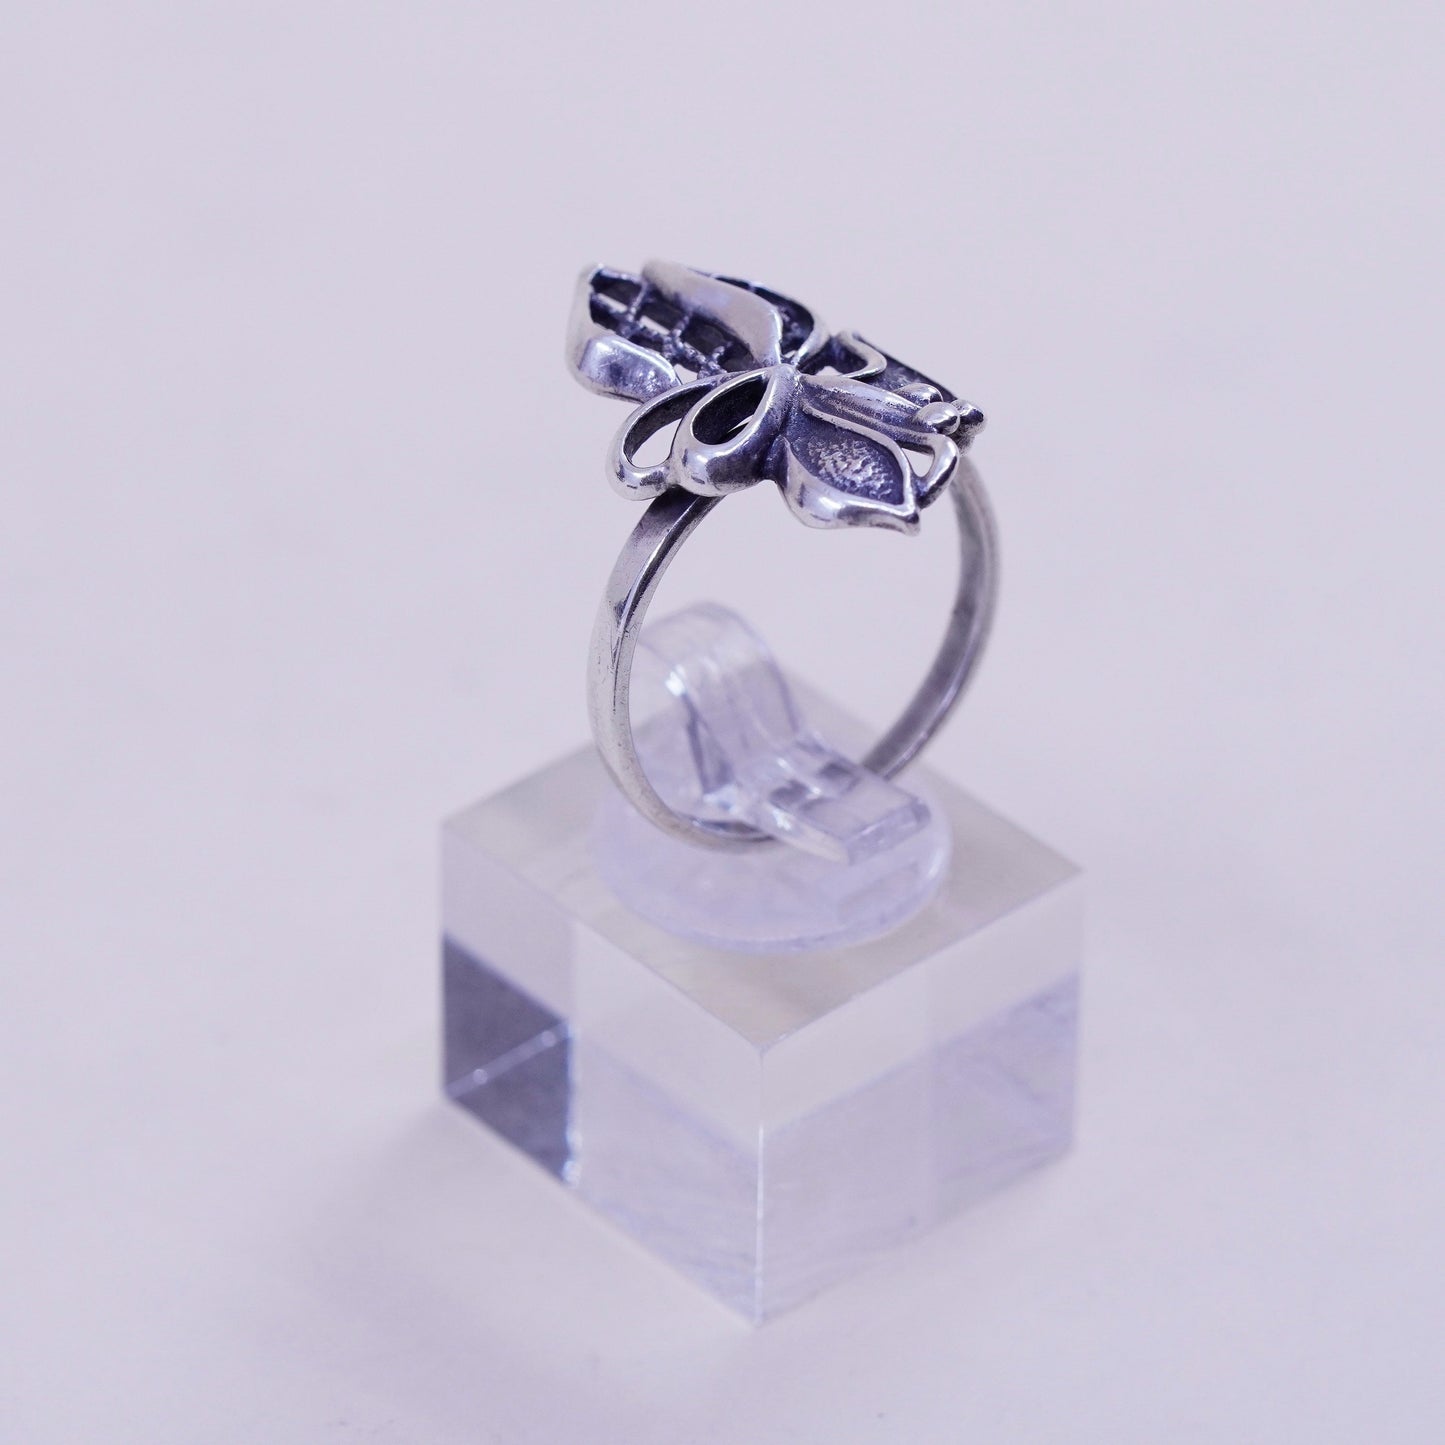 Size 8, vintage Sterling 925 silver handmade flower ring